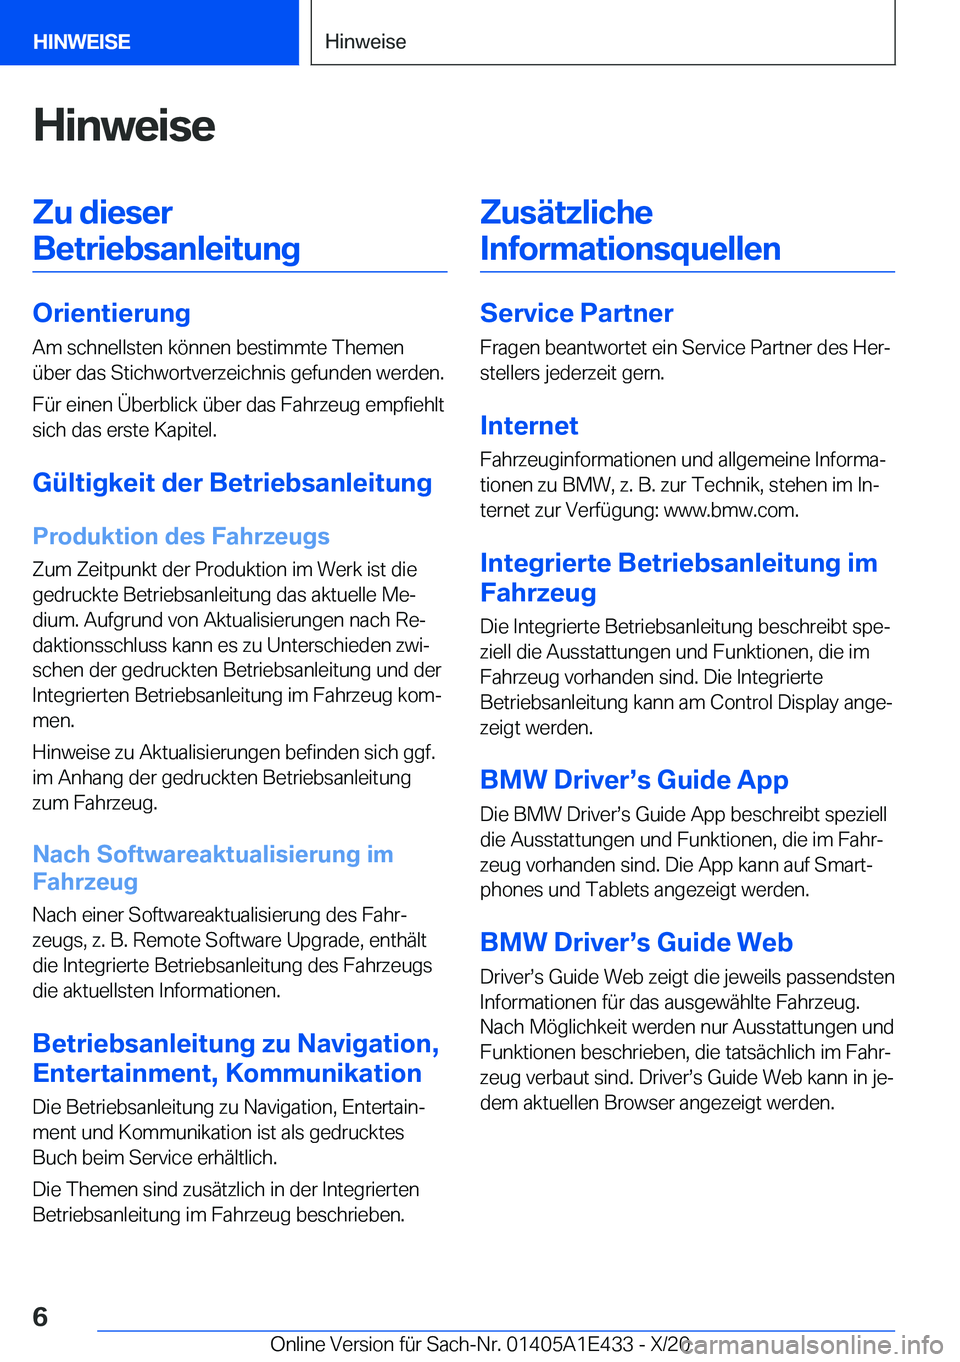 BMW M3 2021  Betriebsanleitungen (in German) �H�i�n�w�e�i�s�e�Z�u��d�i�e�s�e�r�B�e�t�r�i�e�b�s�a�n�l�e�i�t�u�n�g
�O�r�i�e�n�t�i�e�r�u�n�g �A�m��s�c�h�n�e�l�l�s�t�e�n��k�